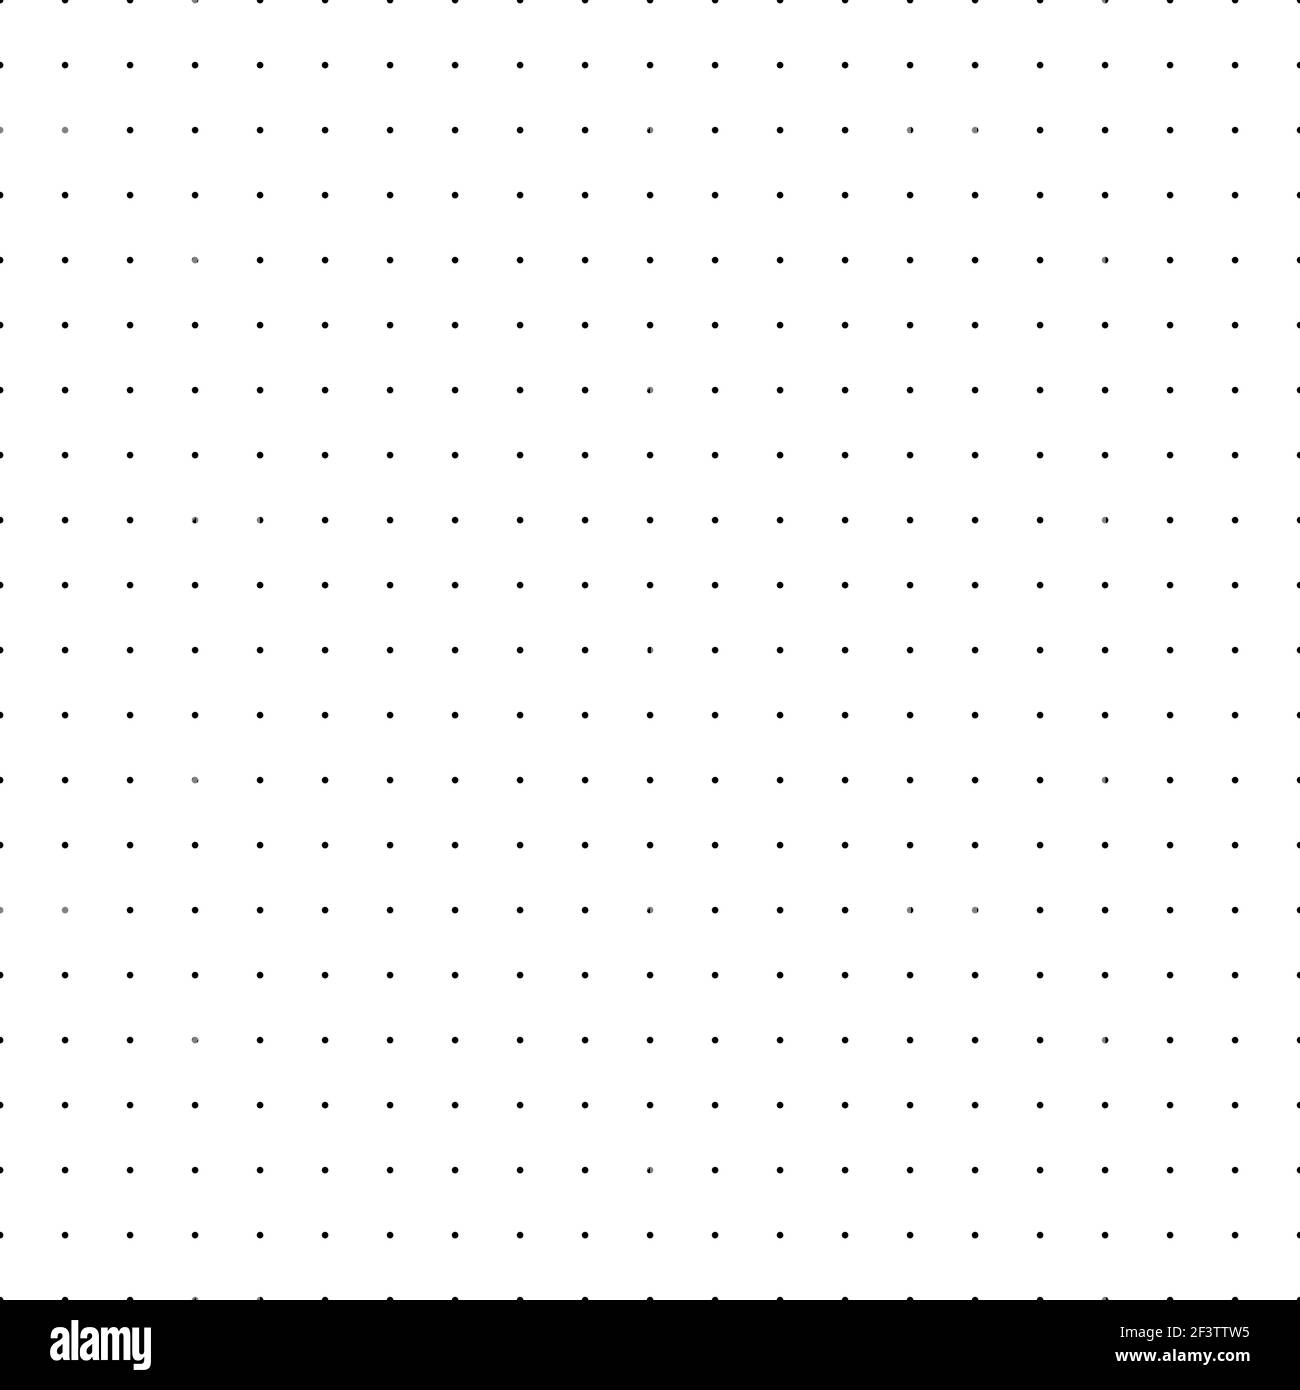 bullet-journal-pages-dot-grid-paper-printable-bullet-journal-dot-grid